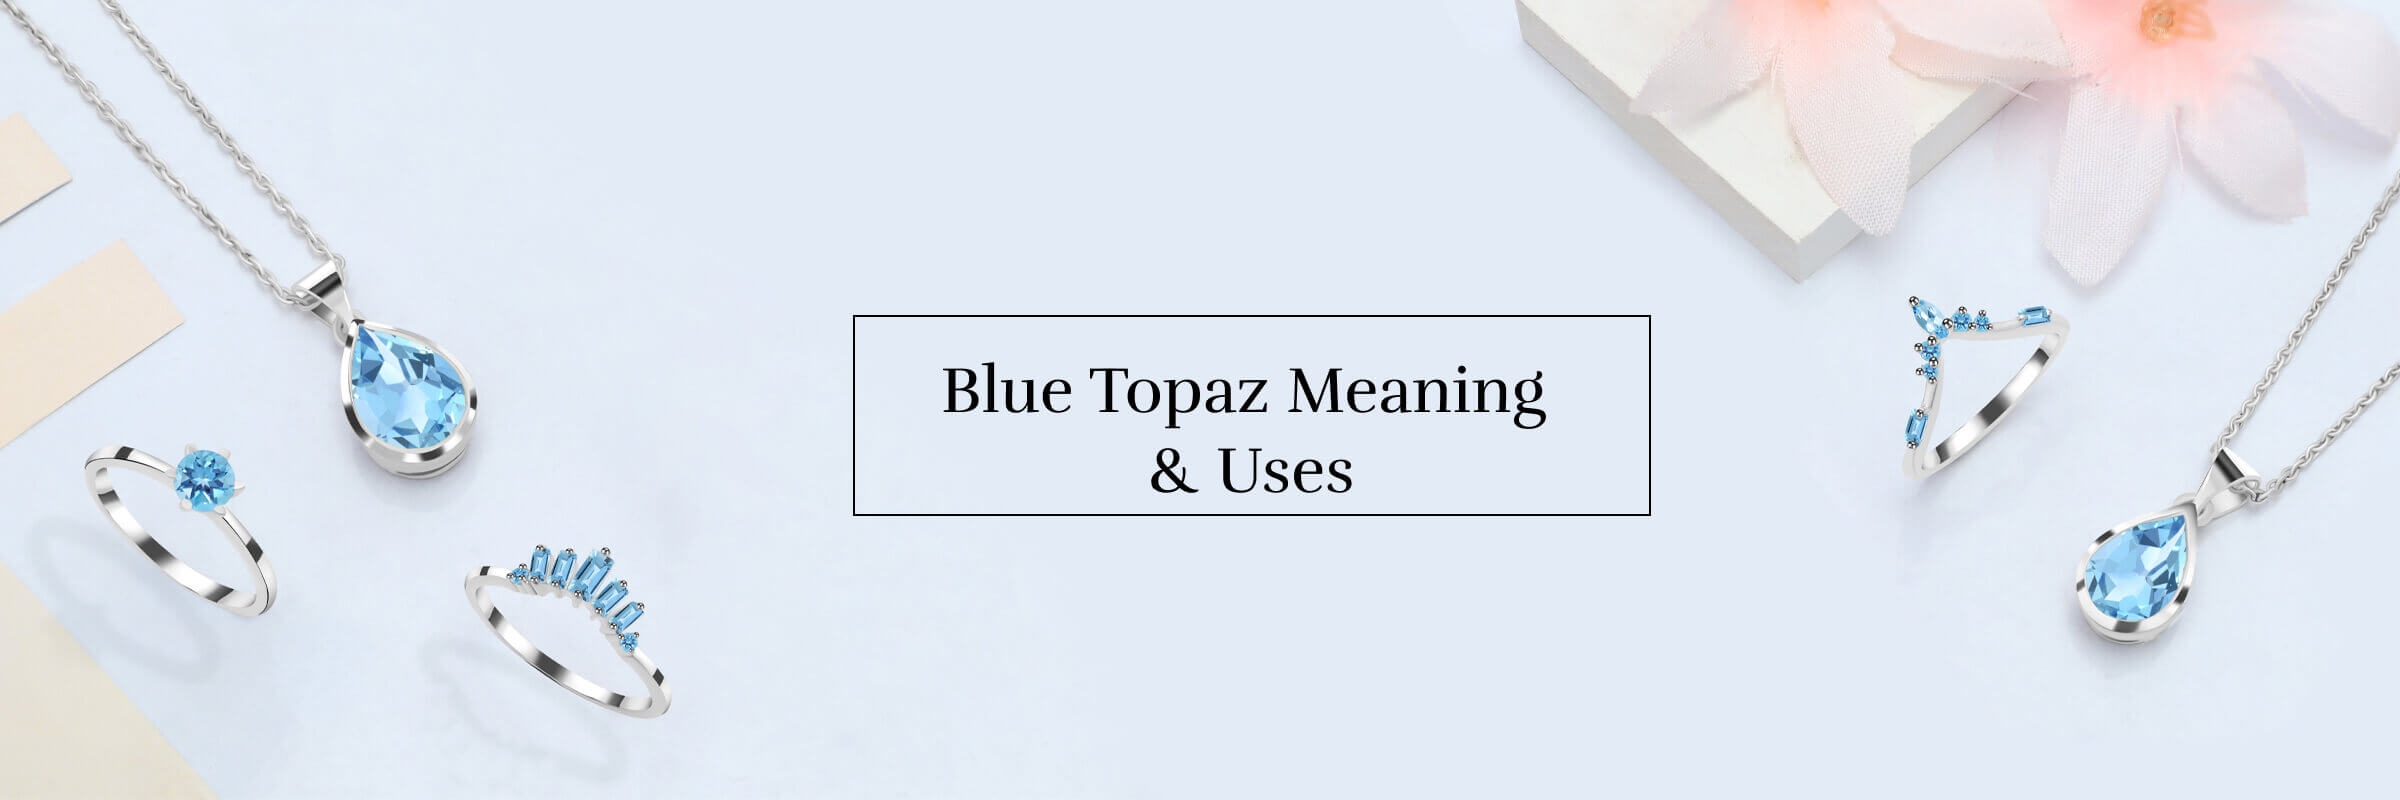 Benefits Of Blue Topaz